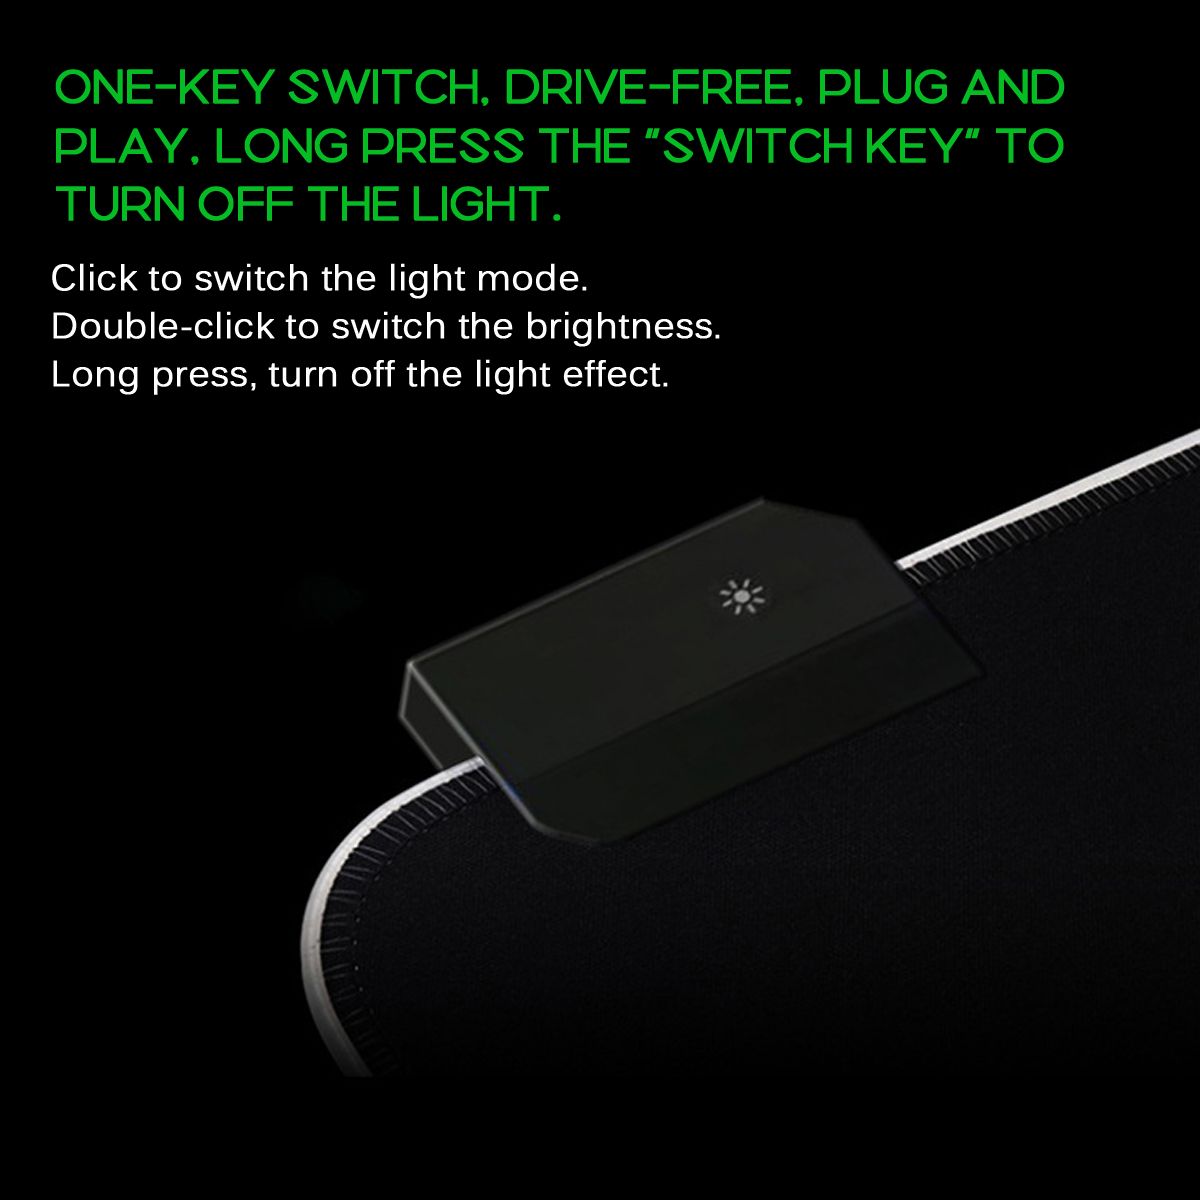 RGB-Magic-USB-Wired-Mouse-Pad-LED-Map-Luminous-Mouse-Mat-Rubber-Luminous-Single-Side-Anti-slip-Mat-1745735